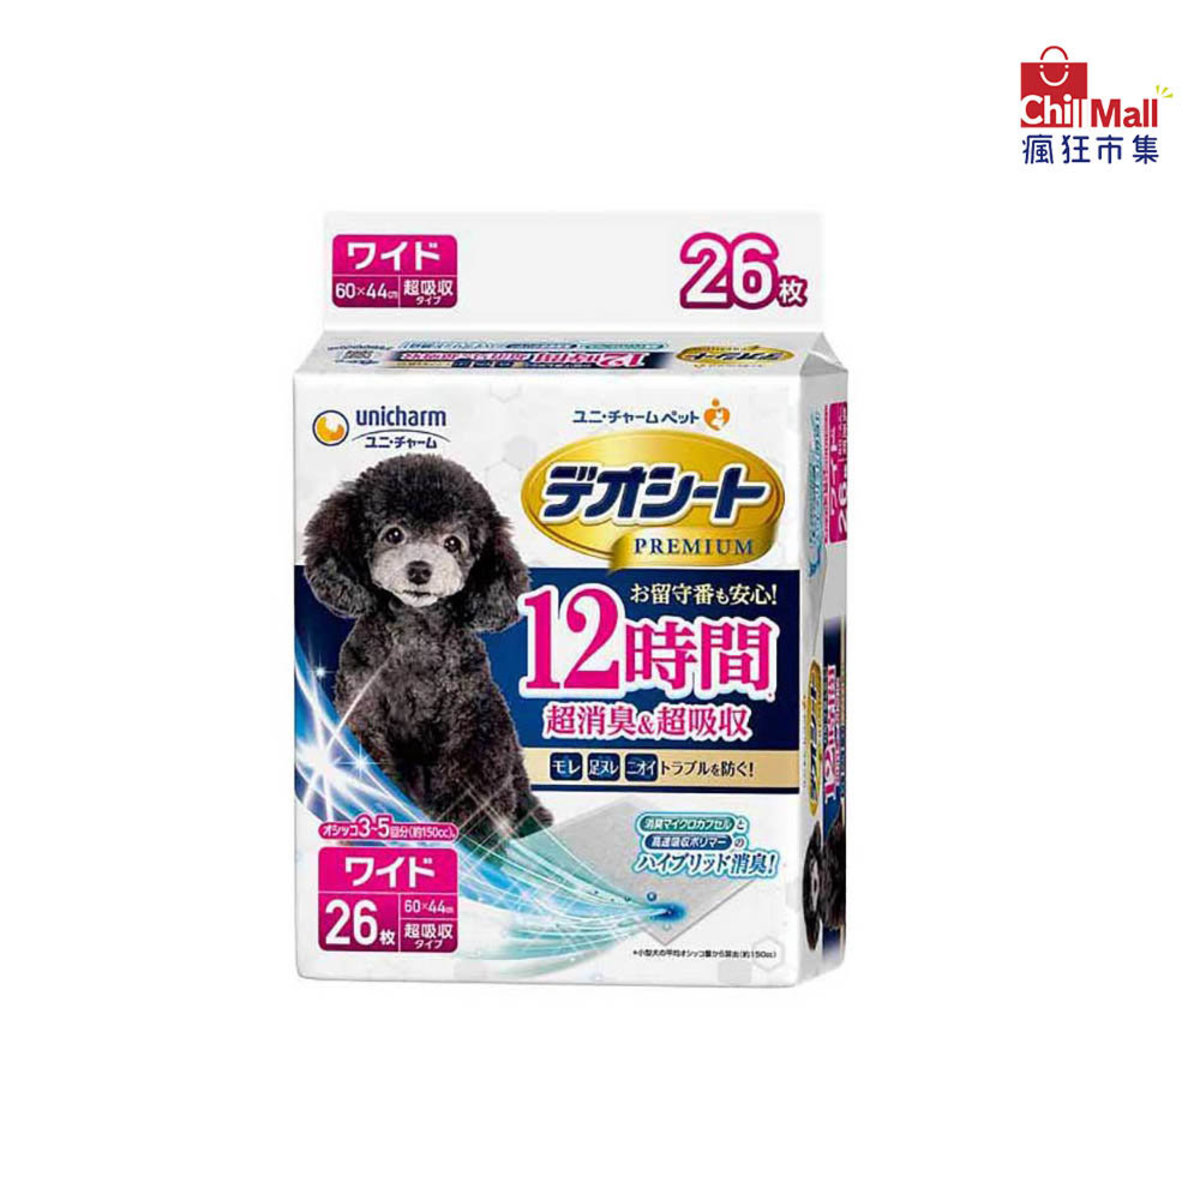 Unicharm 狗尿墊 狗尿片 日本 Premium 超消臭超吸收 寵物尿墊 [44*60 XL碼 26枚] (桃紅) 9659250